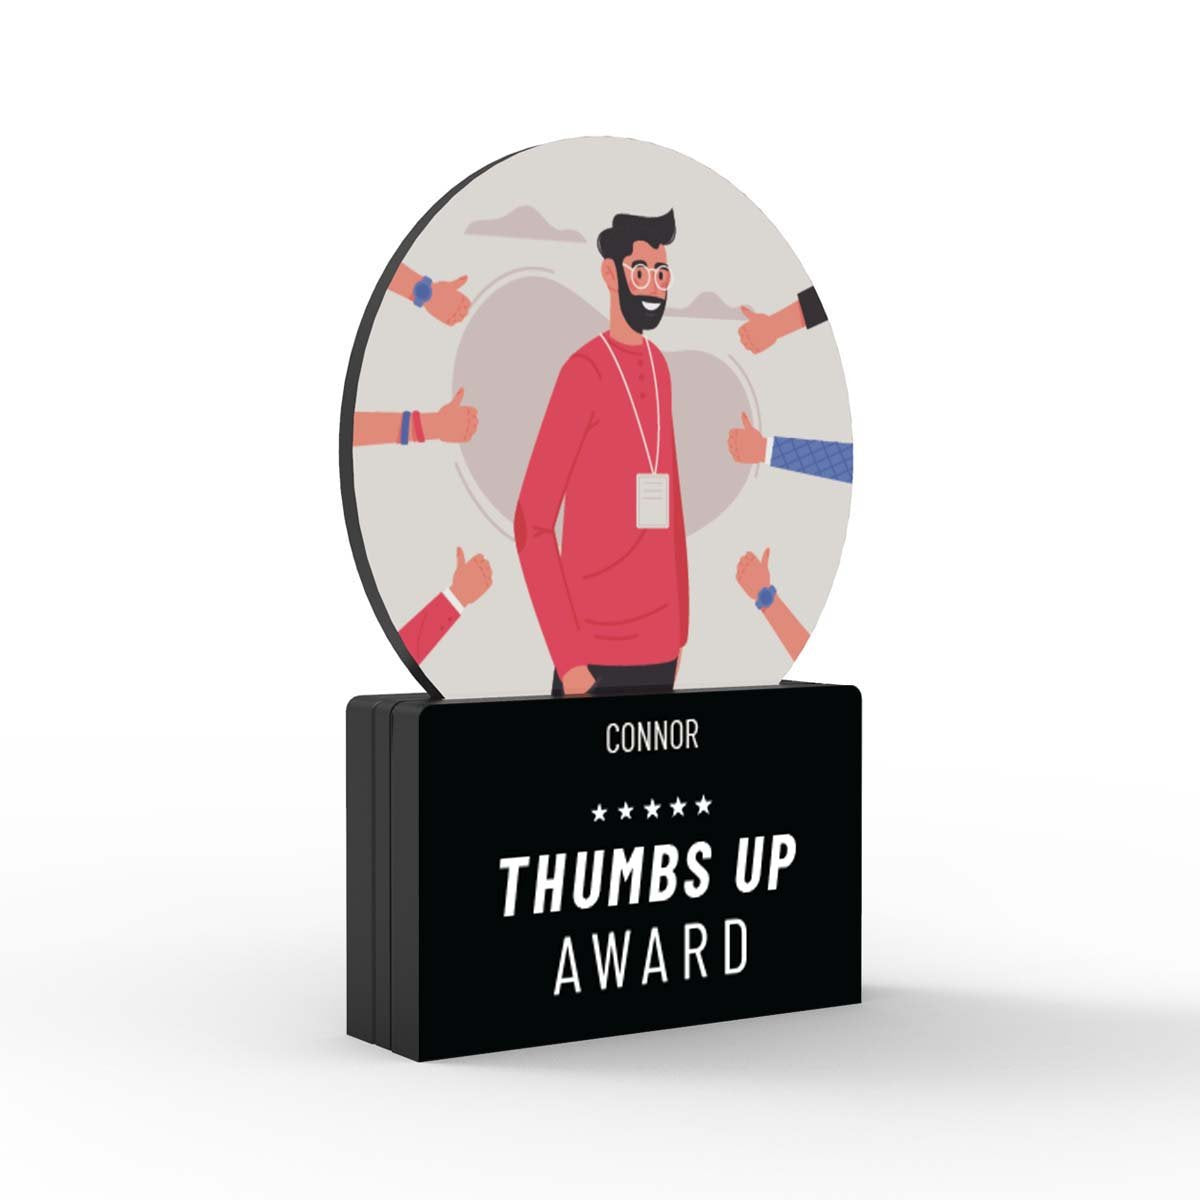 Thumbs Up Award Engrave Awards and More